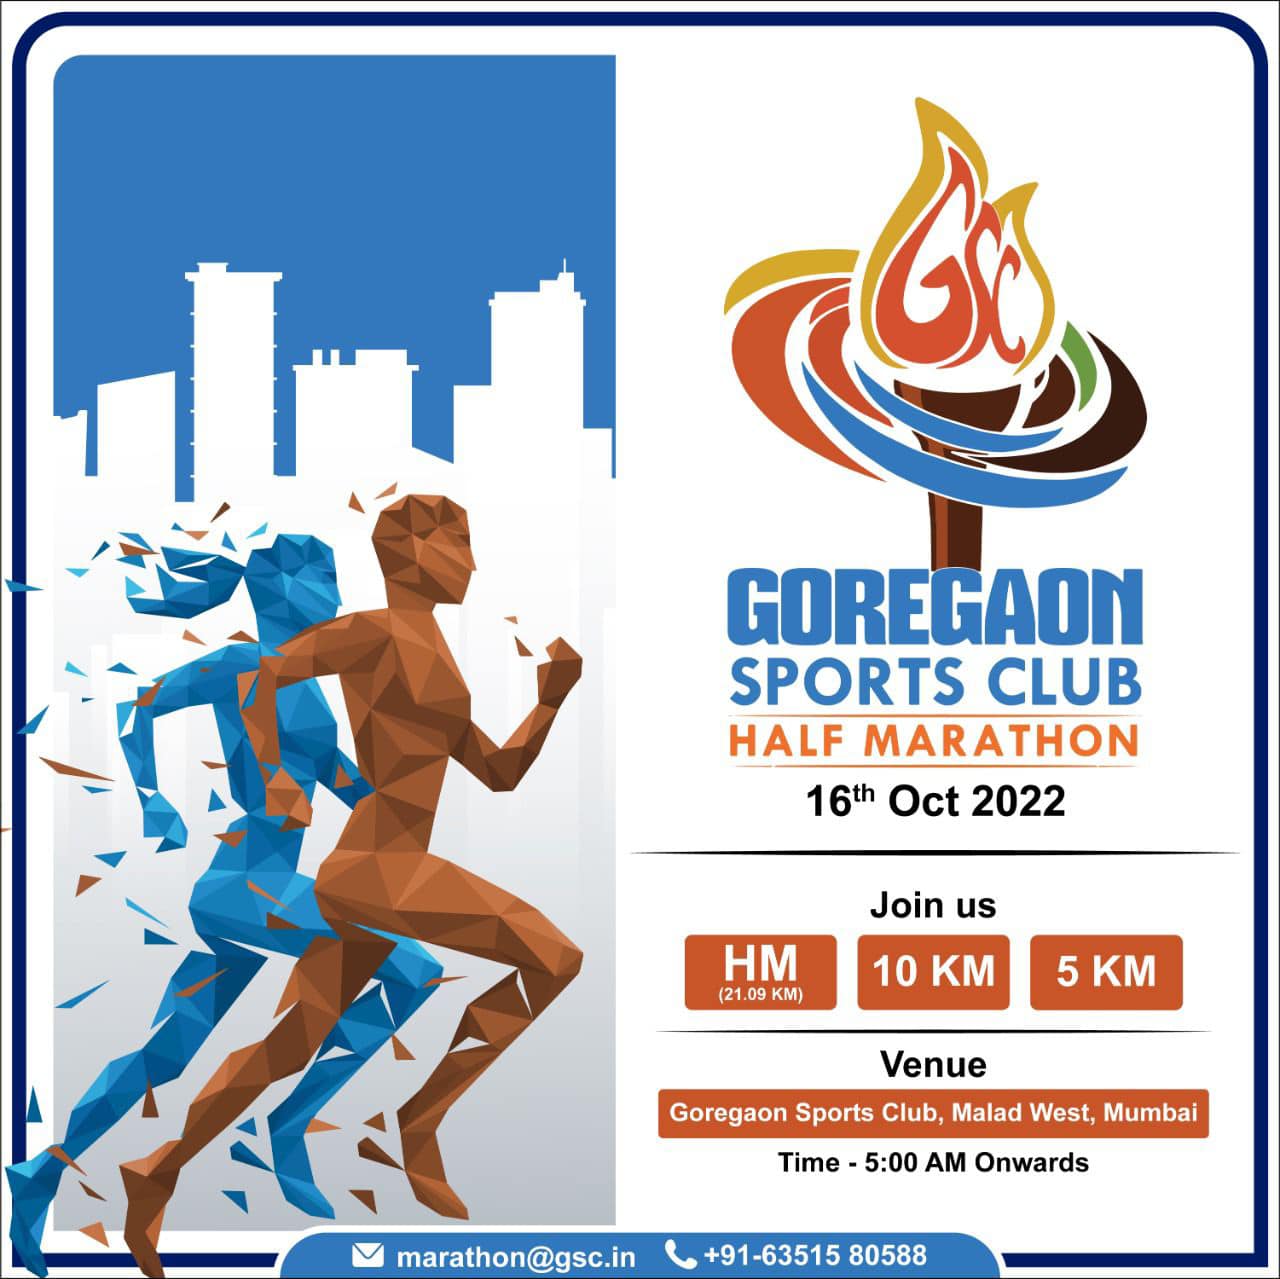 The Goregaon Sports Club Half Marathon